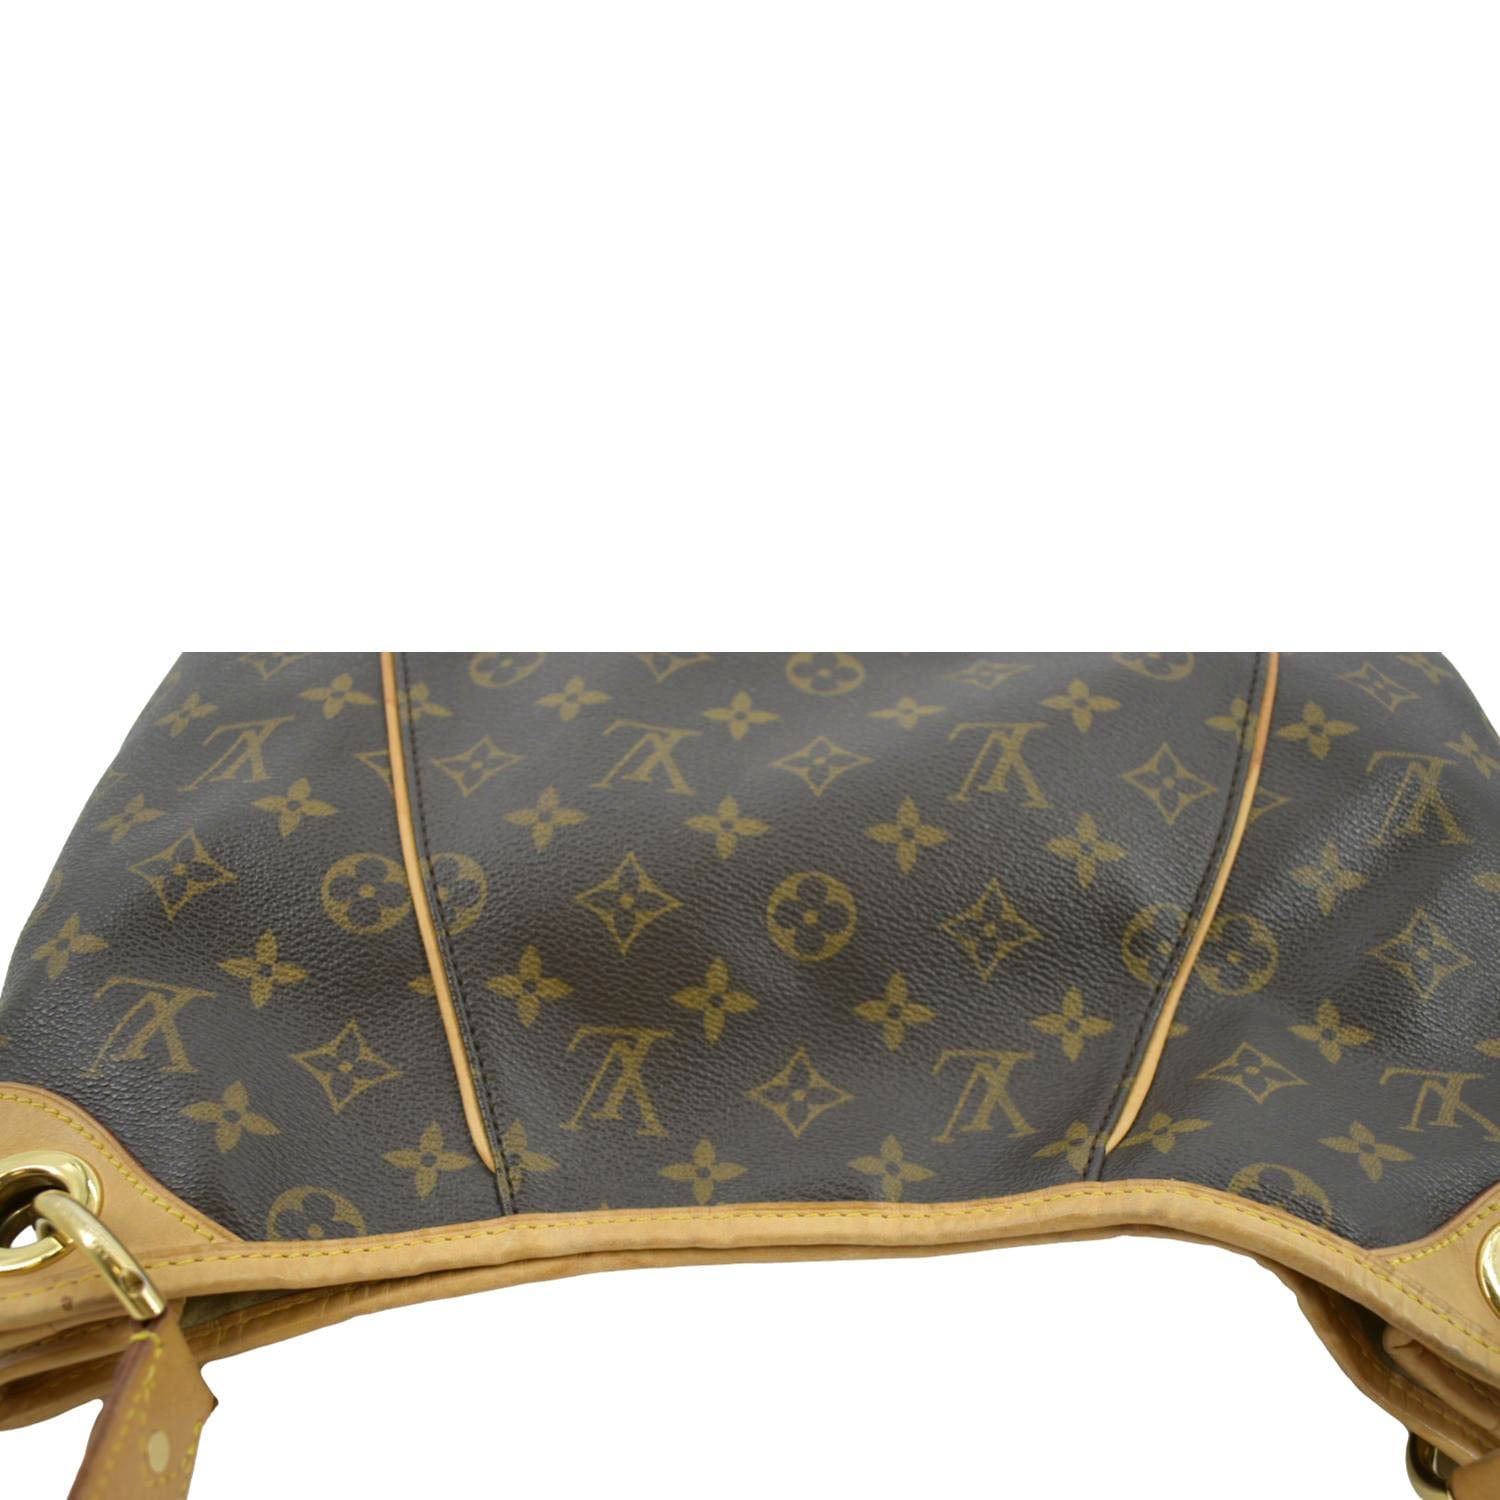 Louis Vuitton on X: An emblem that endures. Today, the Monogram